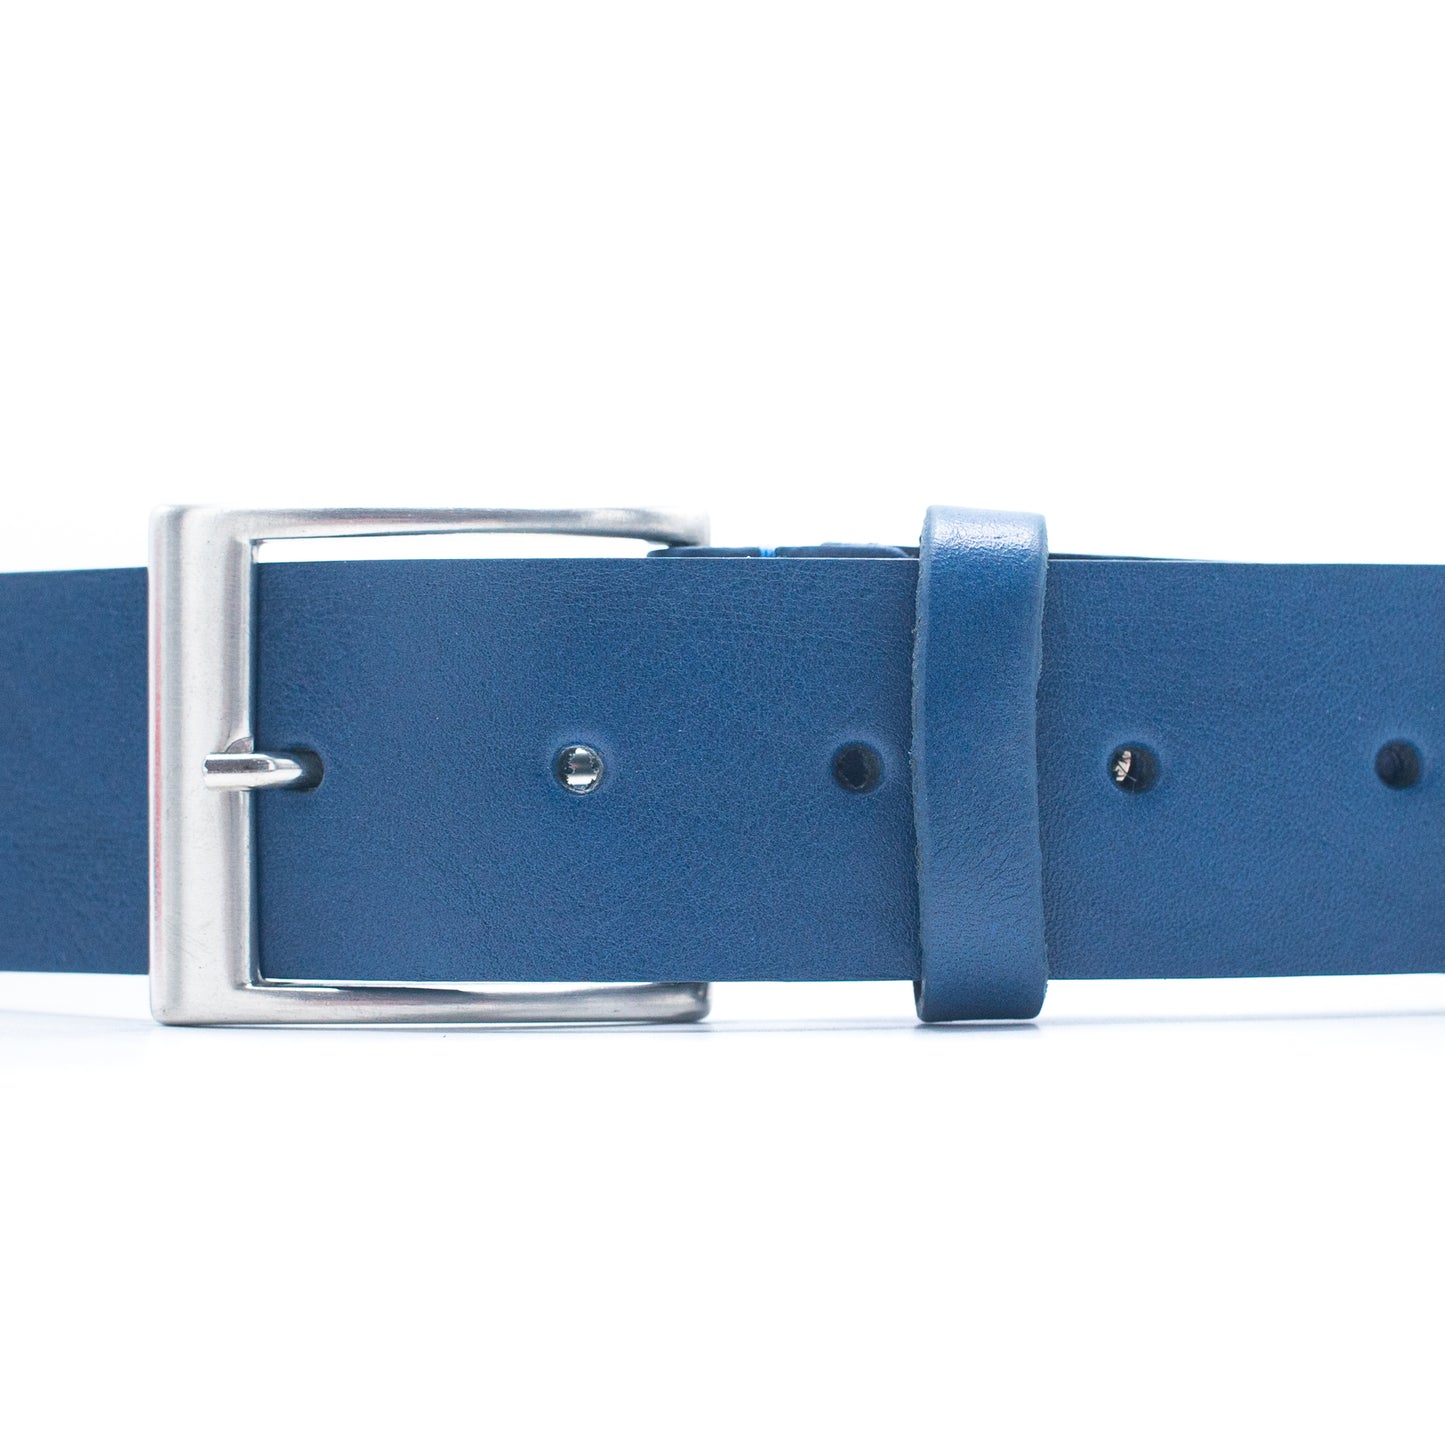 Blue Made in Italy Genuine leather Men Belt LEL-03